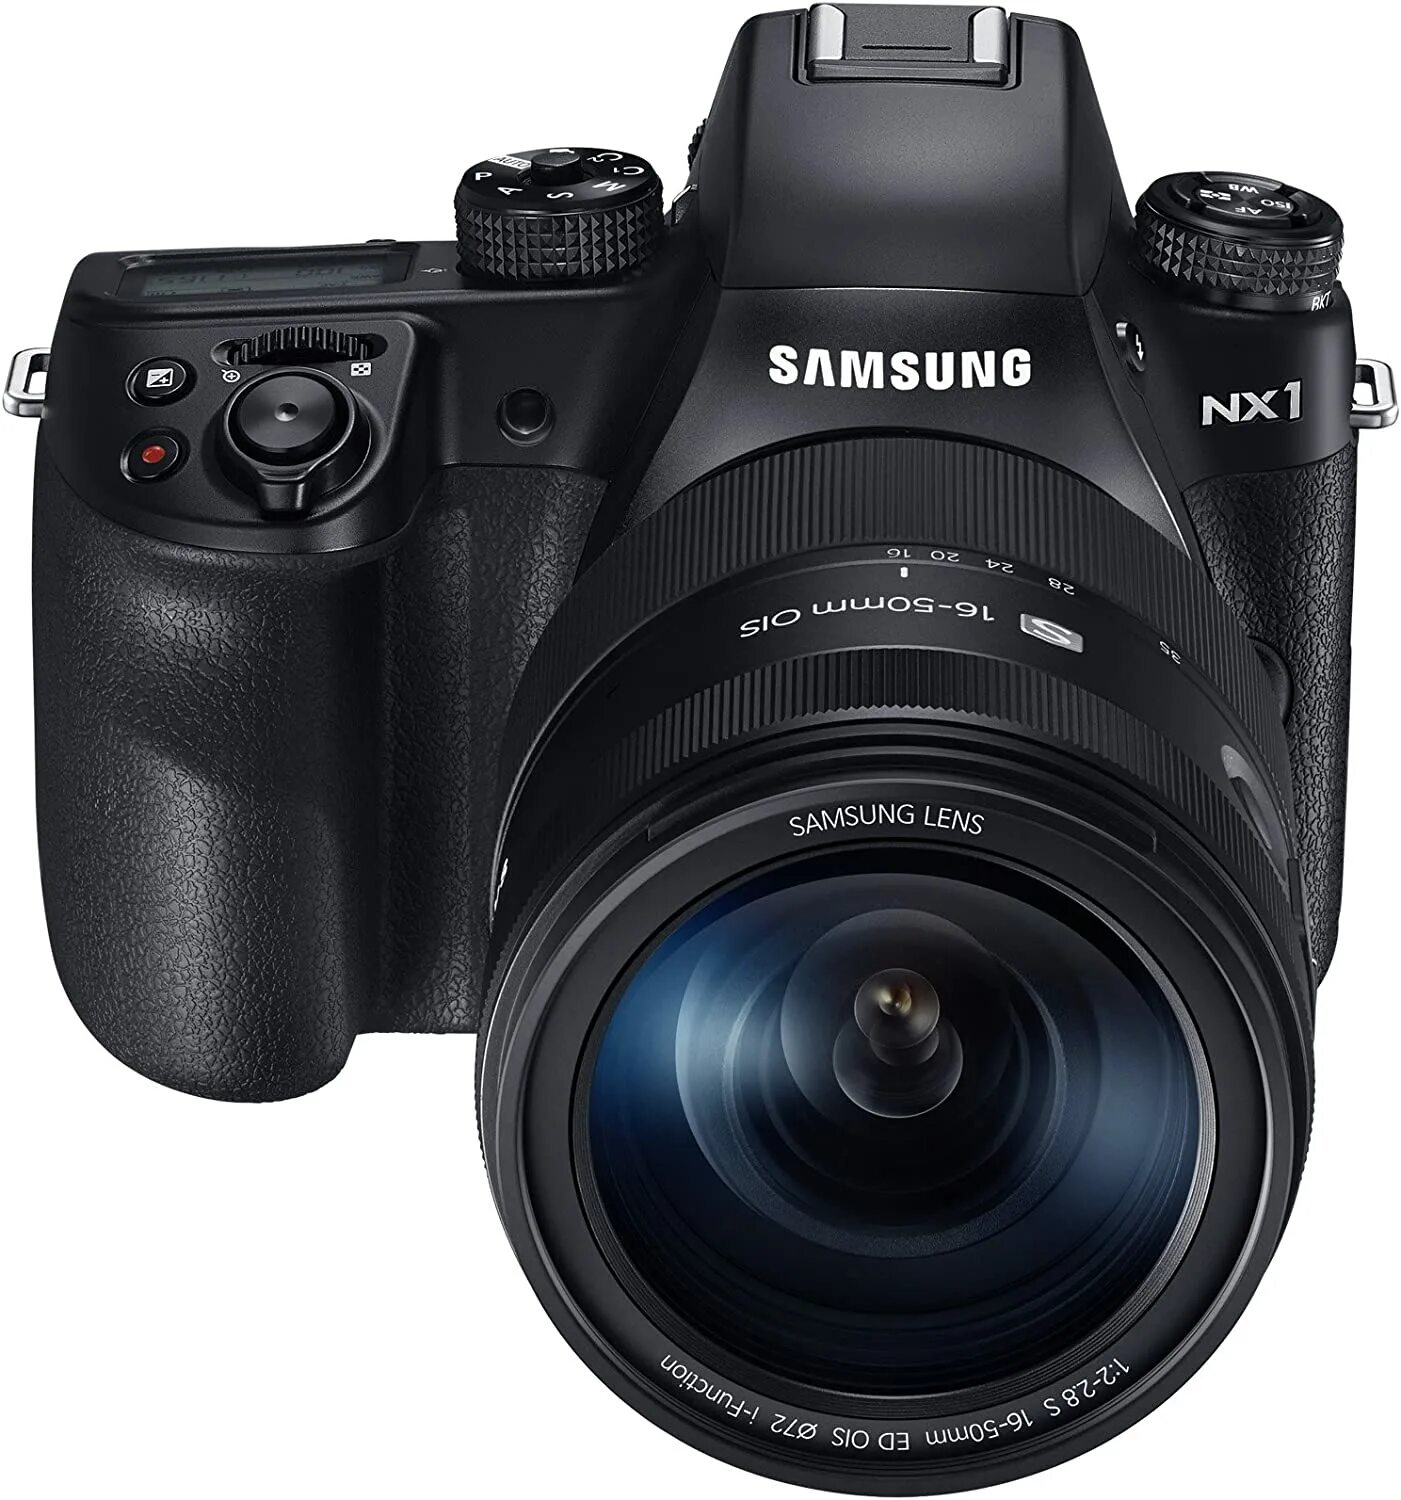 Honor nx1. Фотоаппарат Samsung nx1 Kit. Фотоаппарат самсунг NX фотокамеры. NX'1. Samsung Lens фотоаппарат 35 мм.